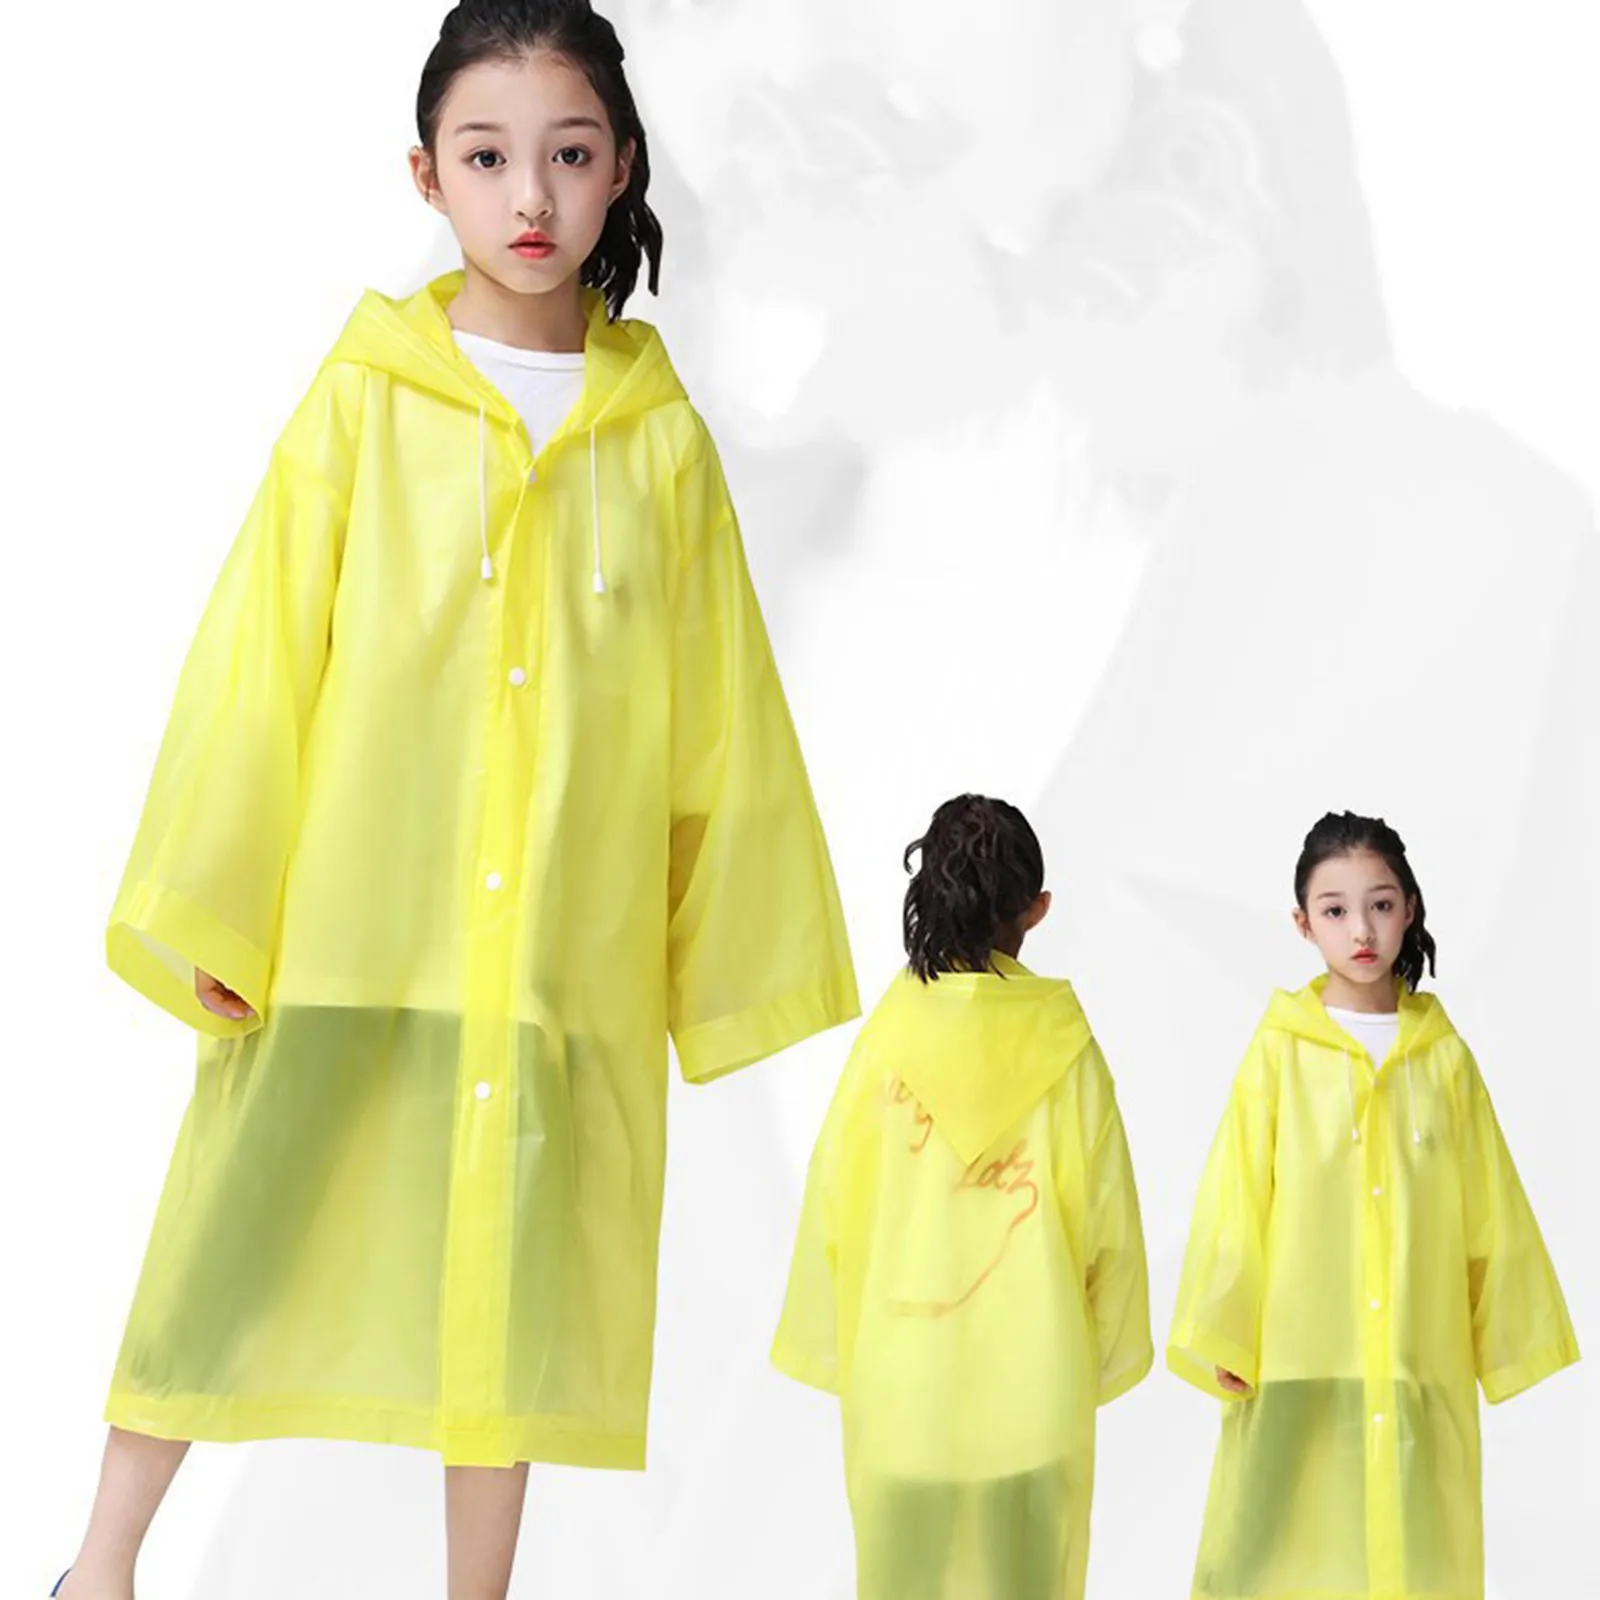 

Reusable Hooded Raincoat Portable Jackets For Boys Girls Transparent Poncho Eva Children Raincoats Waterproof Rainwear Suit